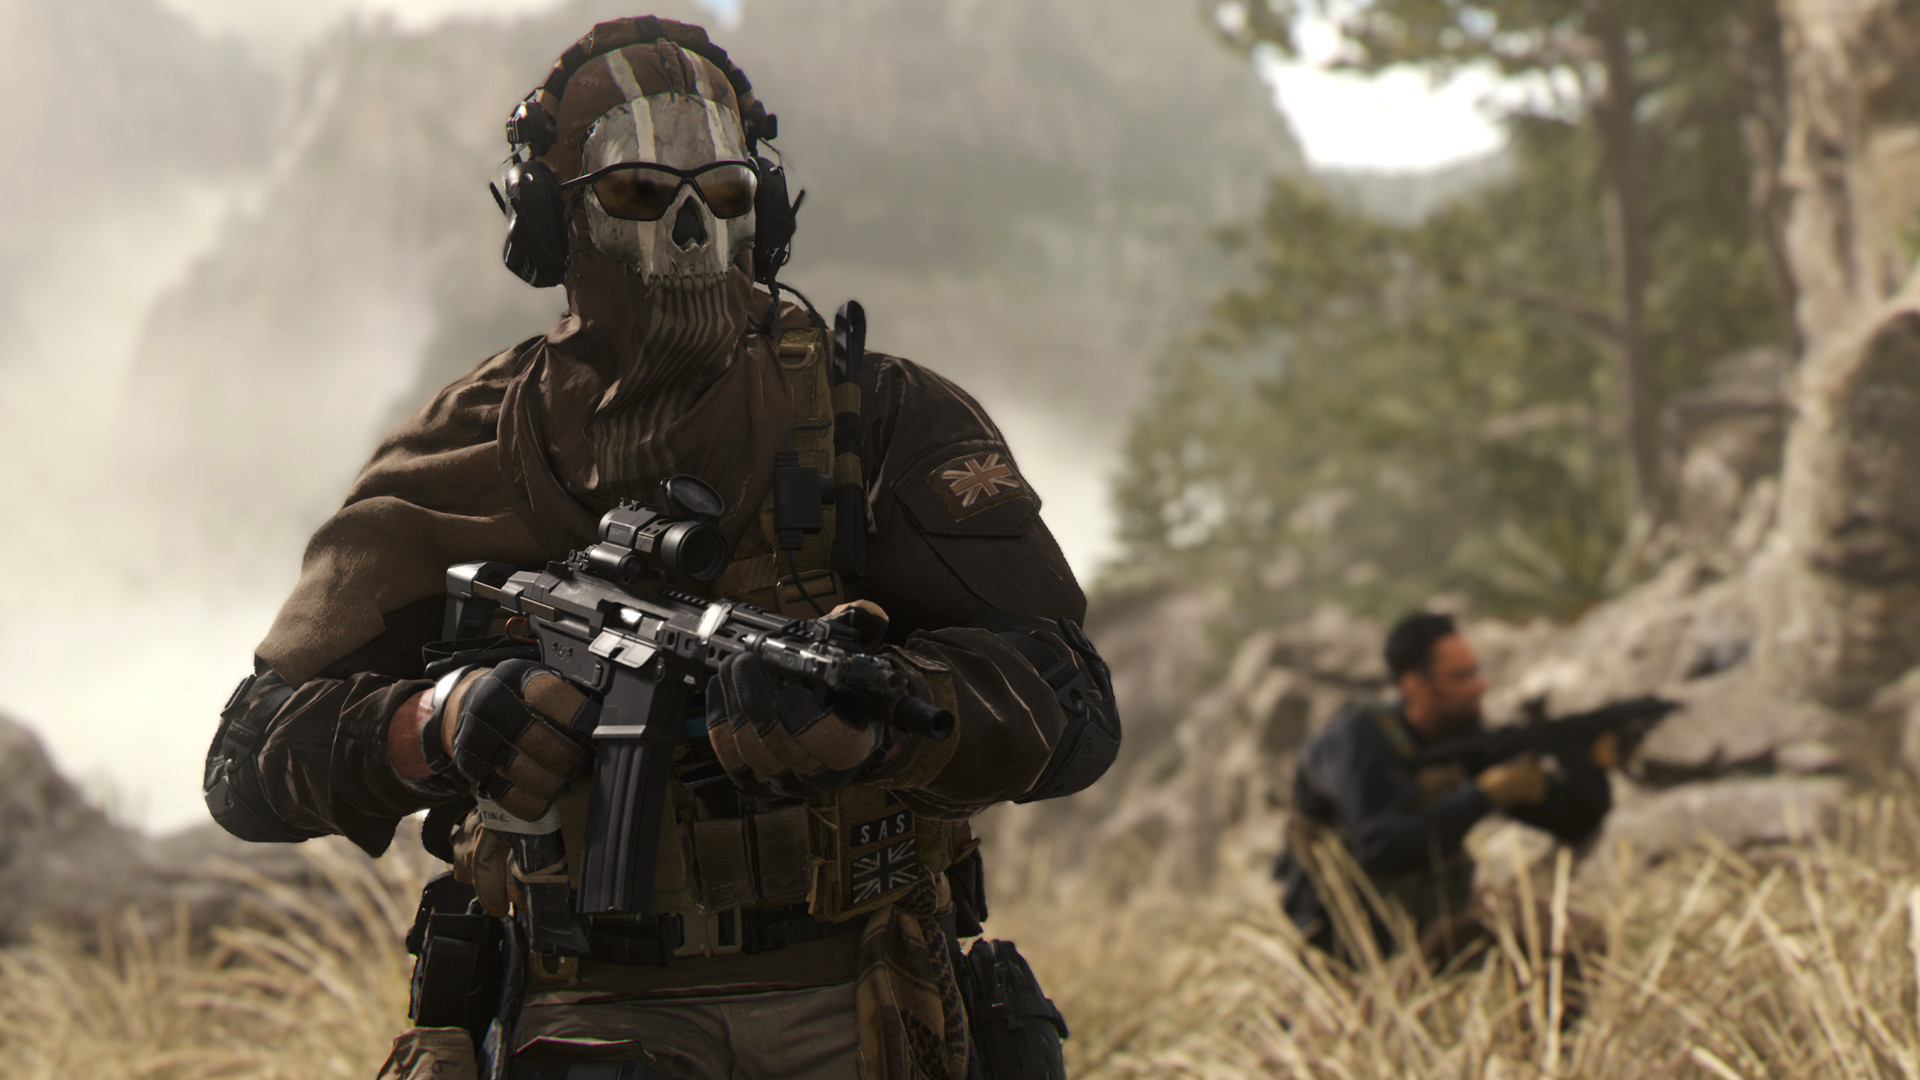 Jogo Call Of Dutty Modern Warfare II para PS5 no Paraguai